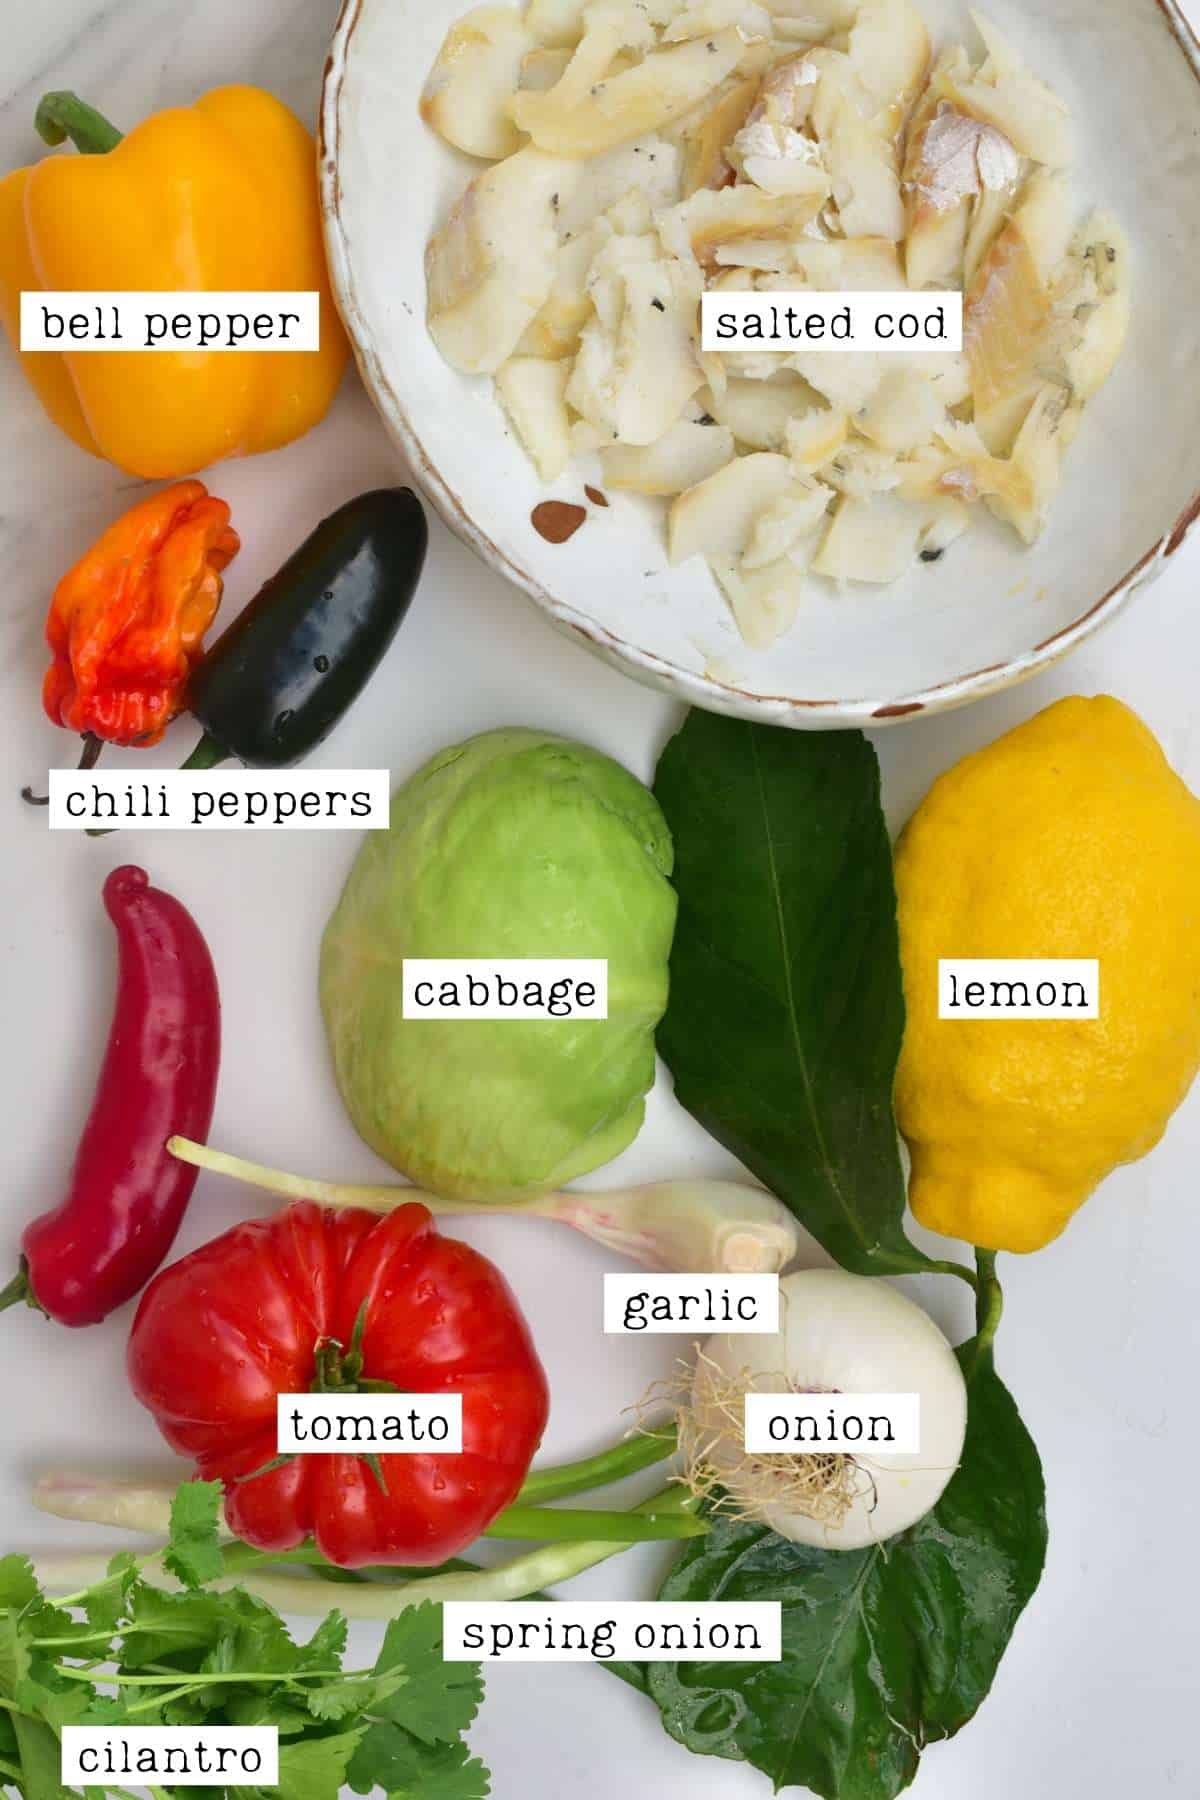 Ingredients for salted cod salad